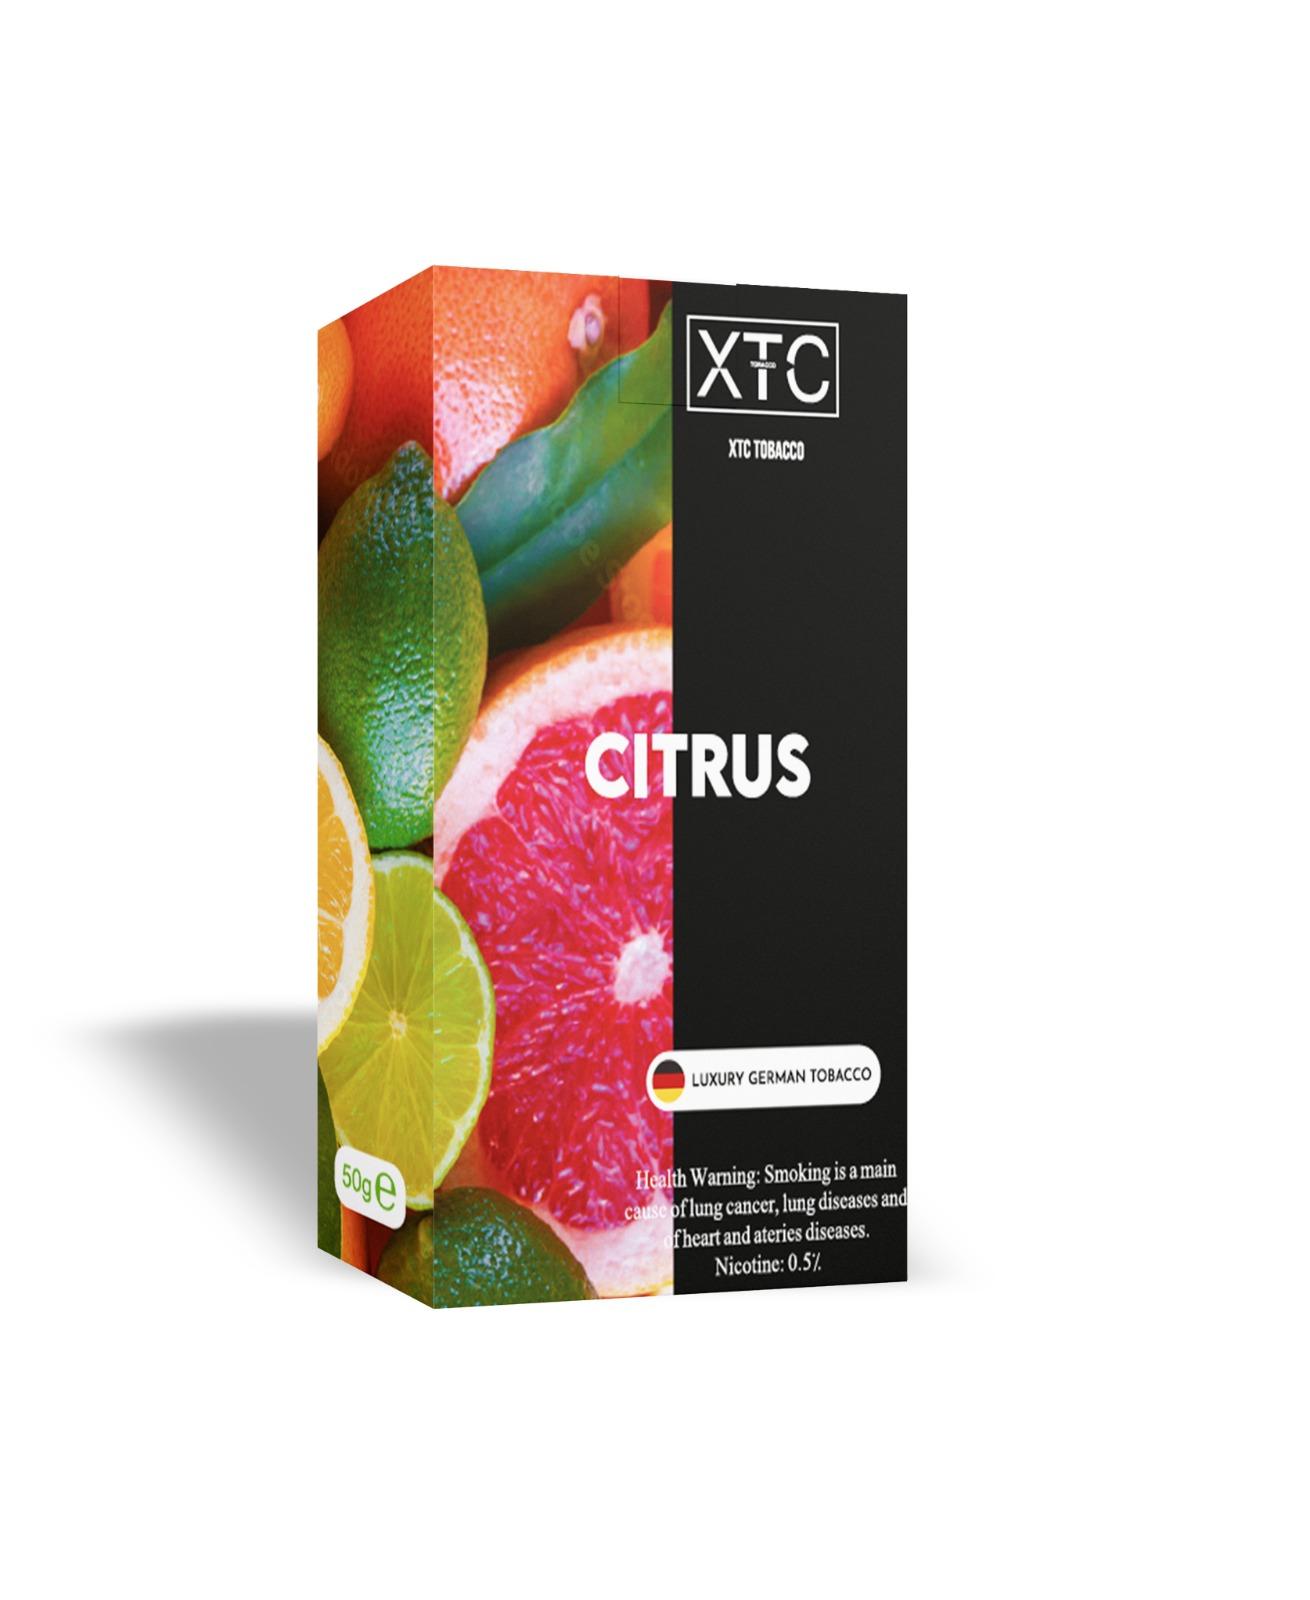 Image of XTC Tobacco product Citrus